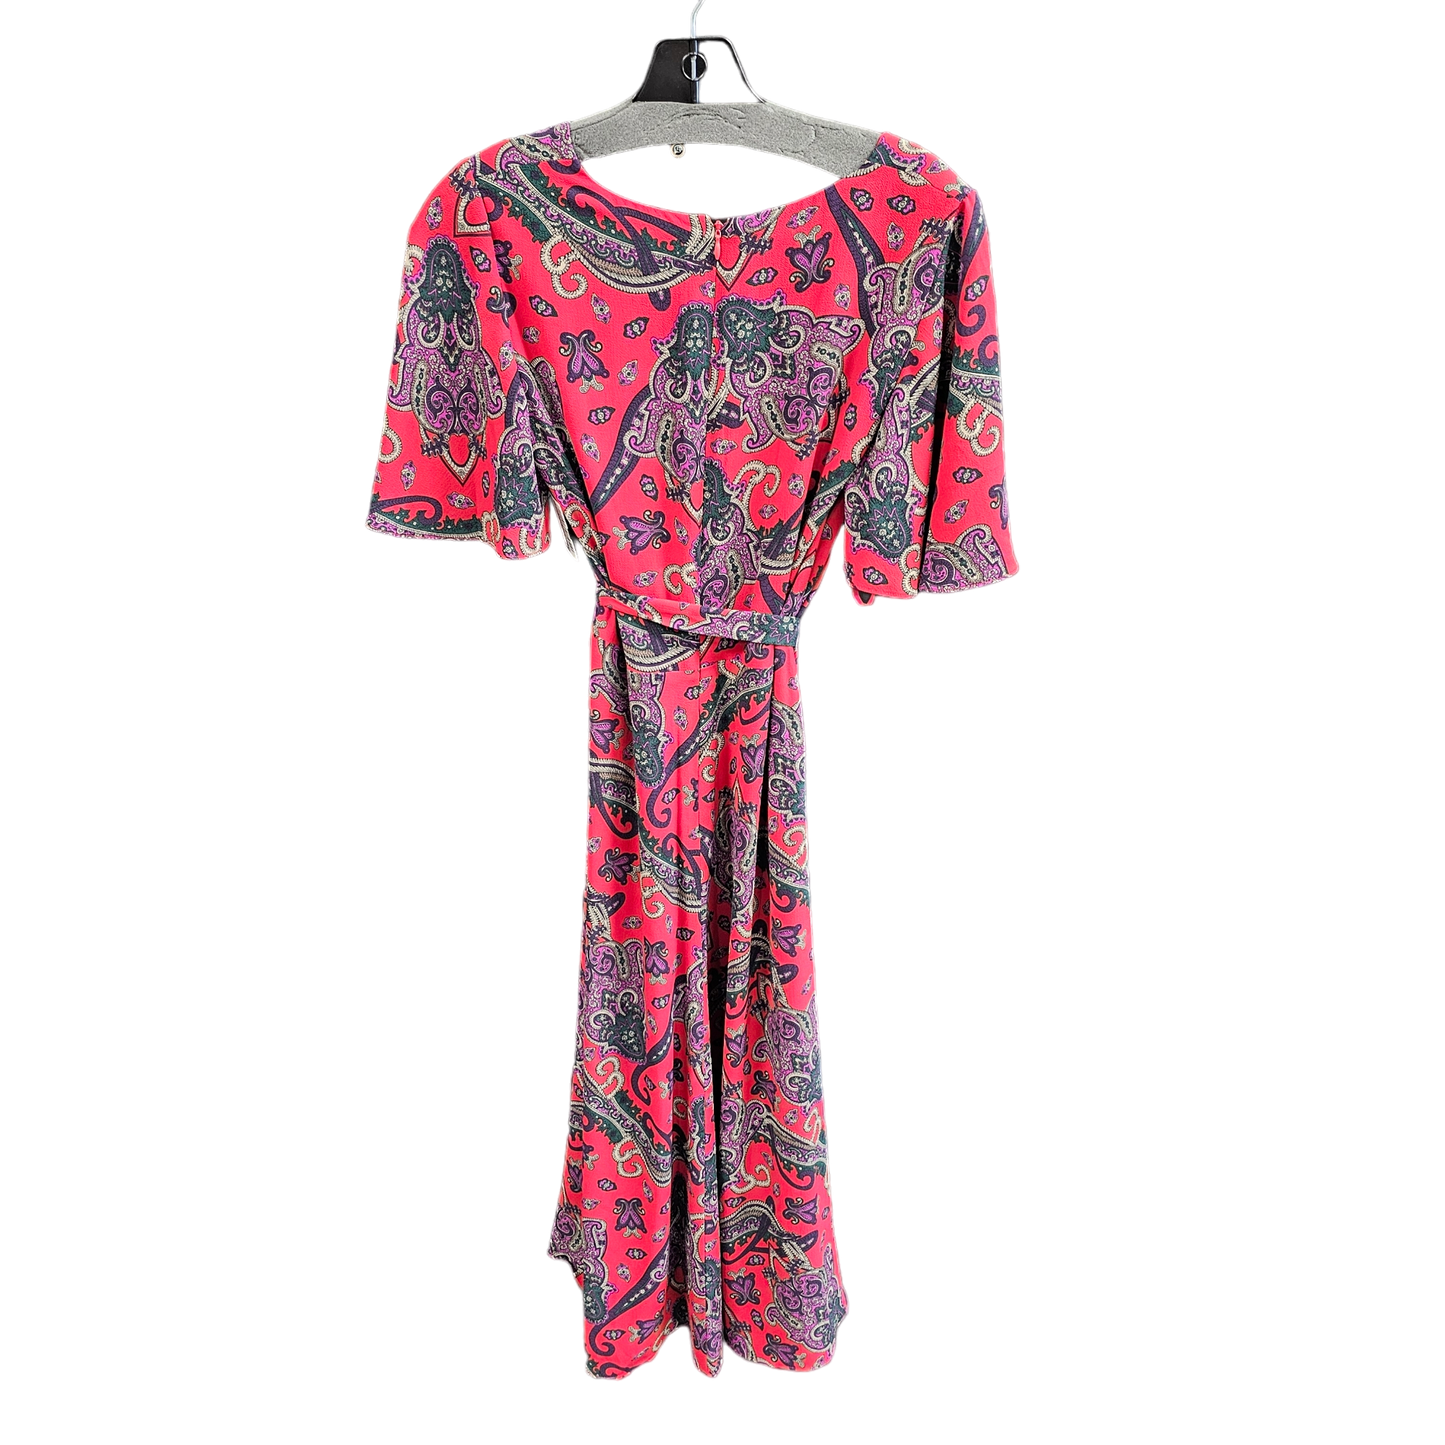 Dress Casual Midi By Lauren By Ralph Lauren  Size: 0